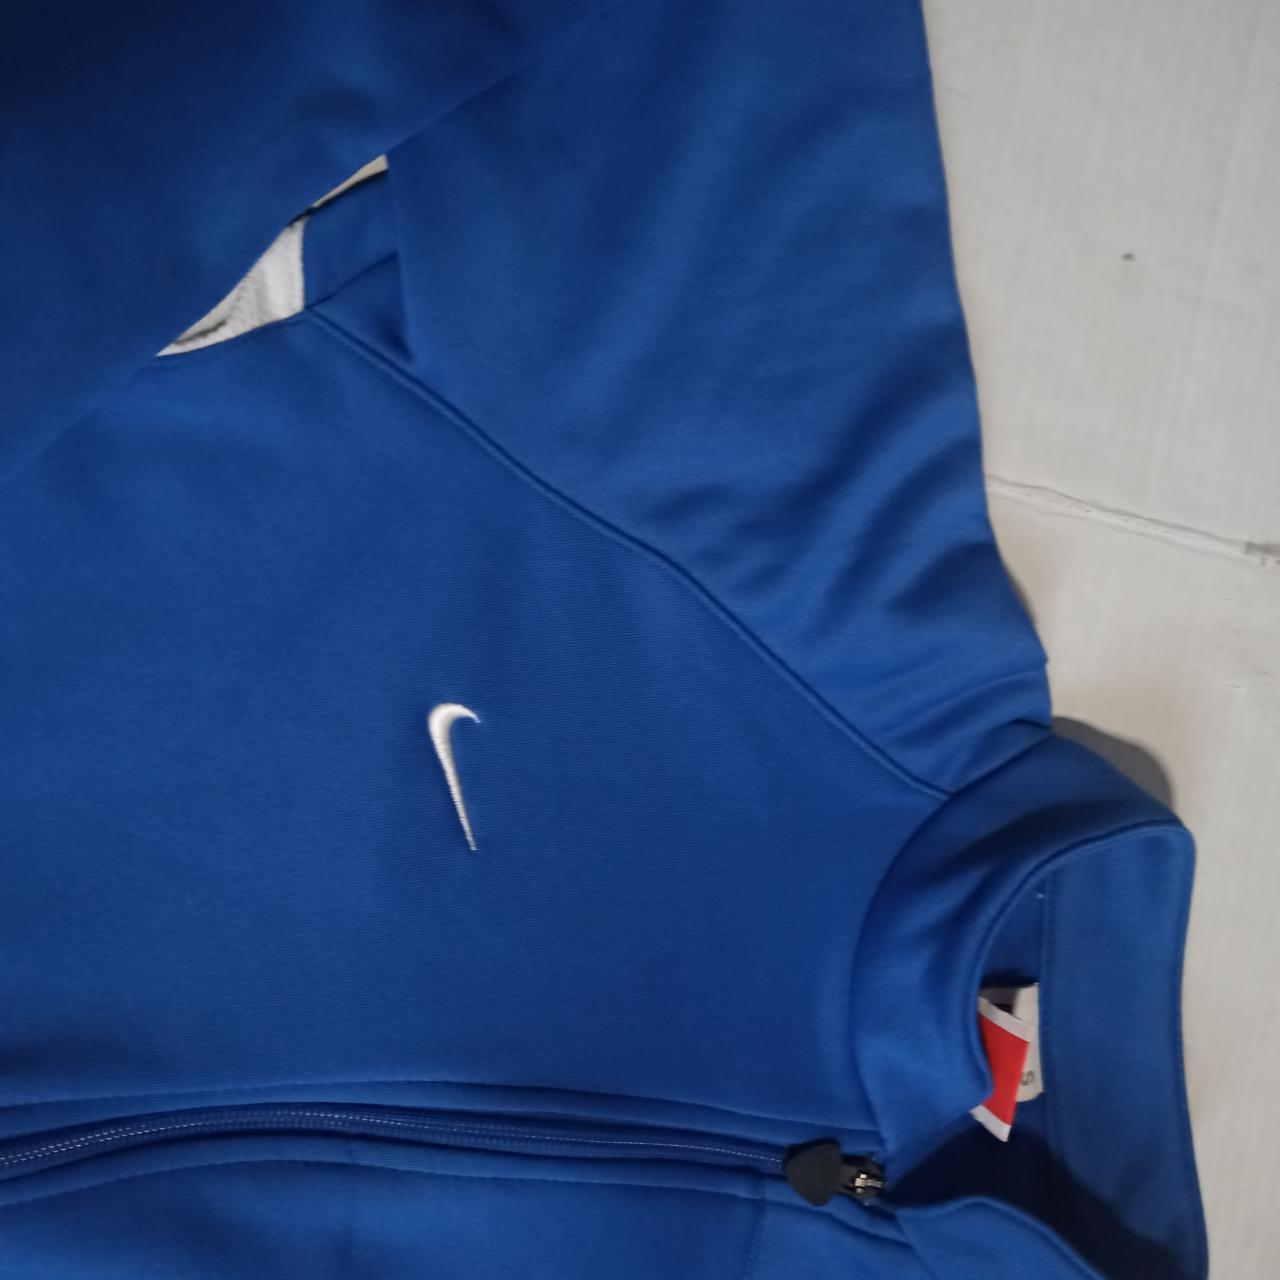 Nike Women's Blue and White Jacket (2)